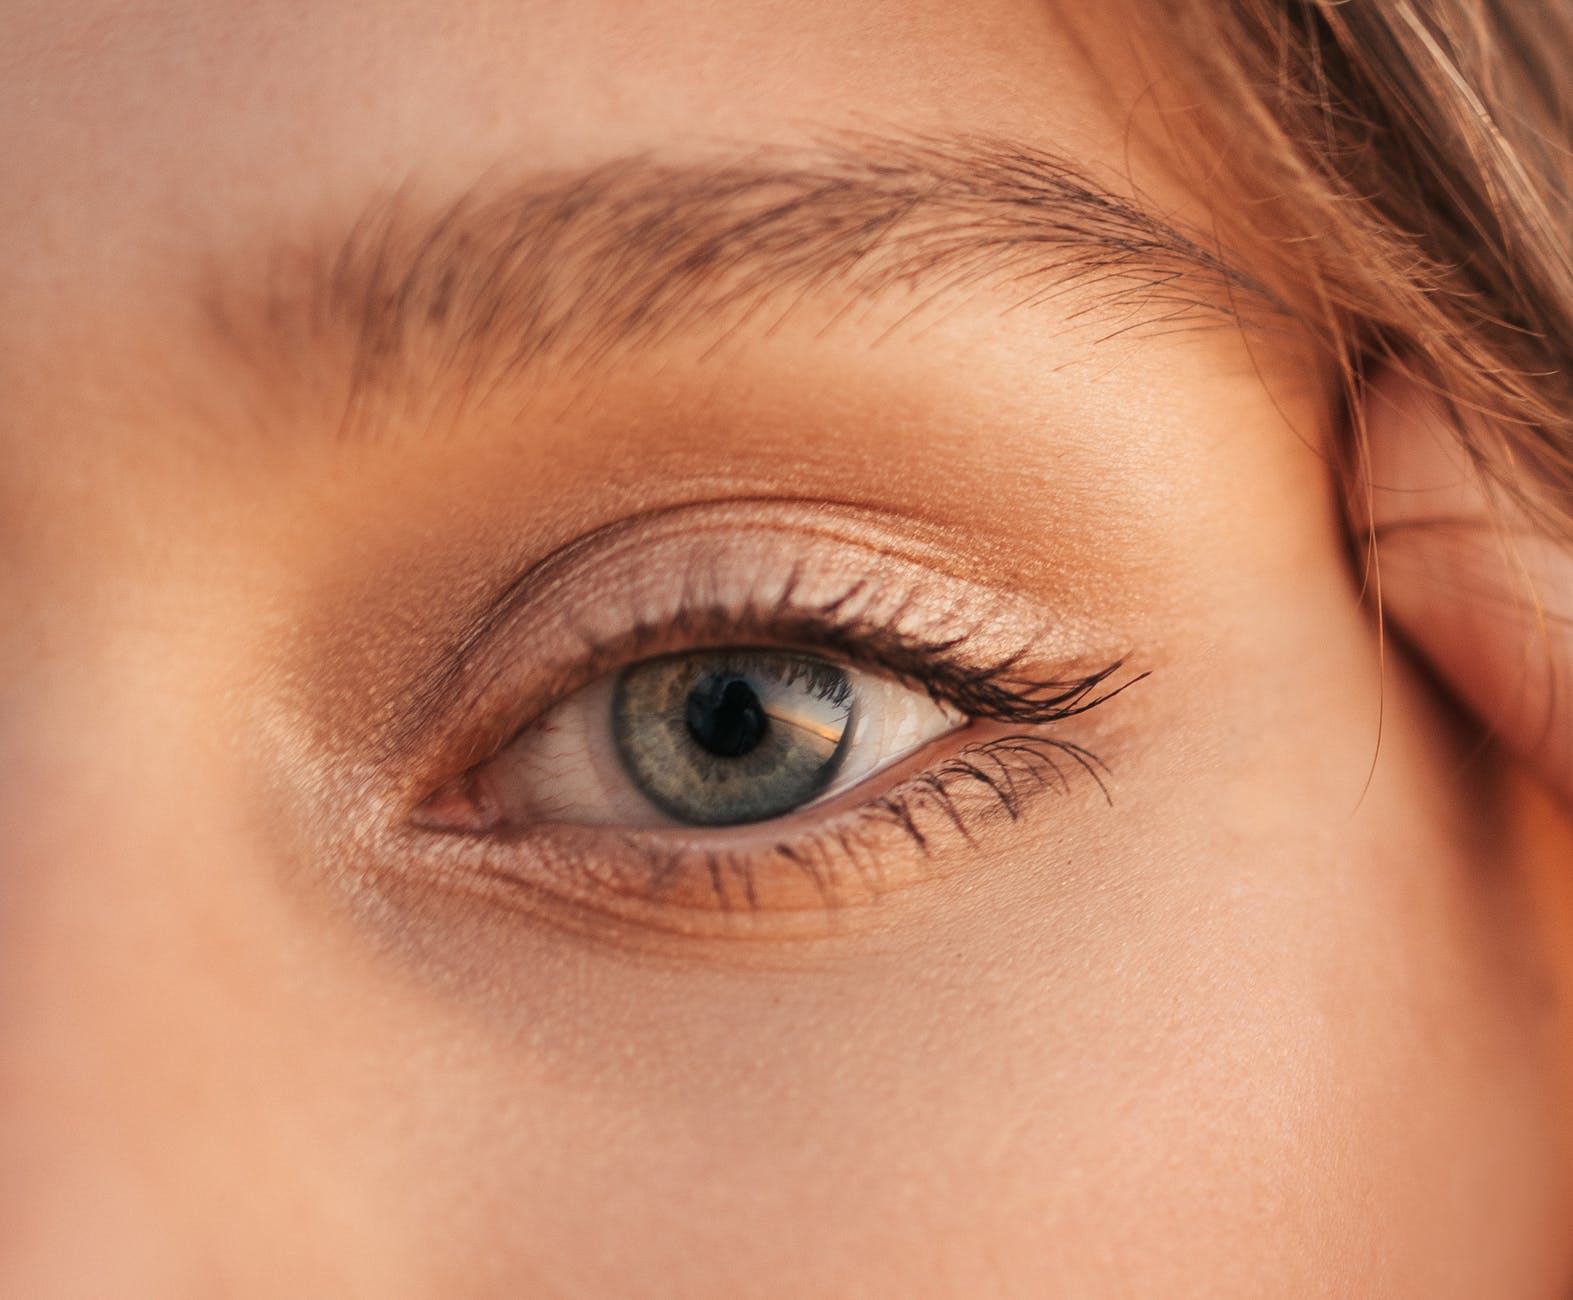 Photo of a women's eye